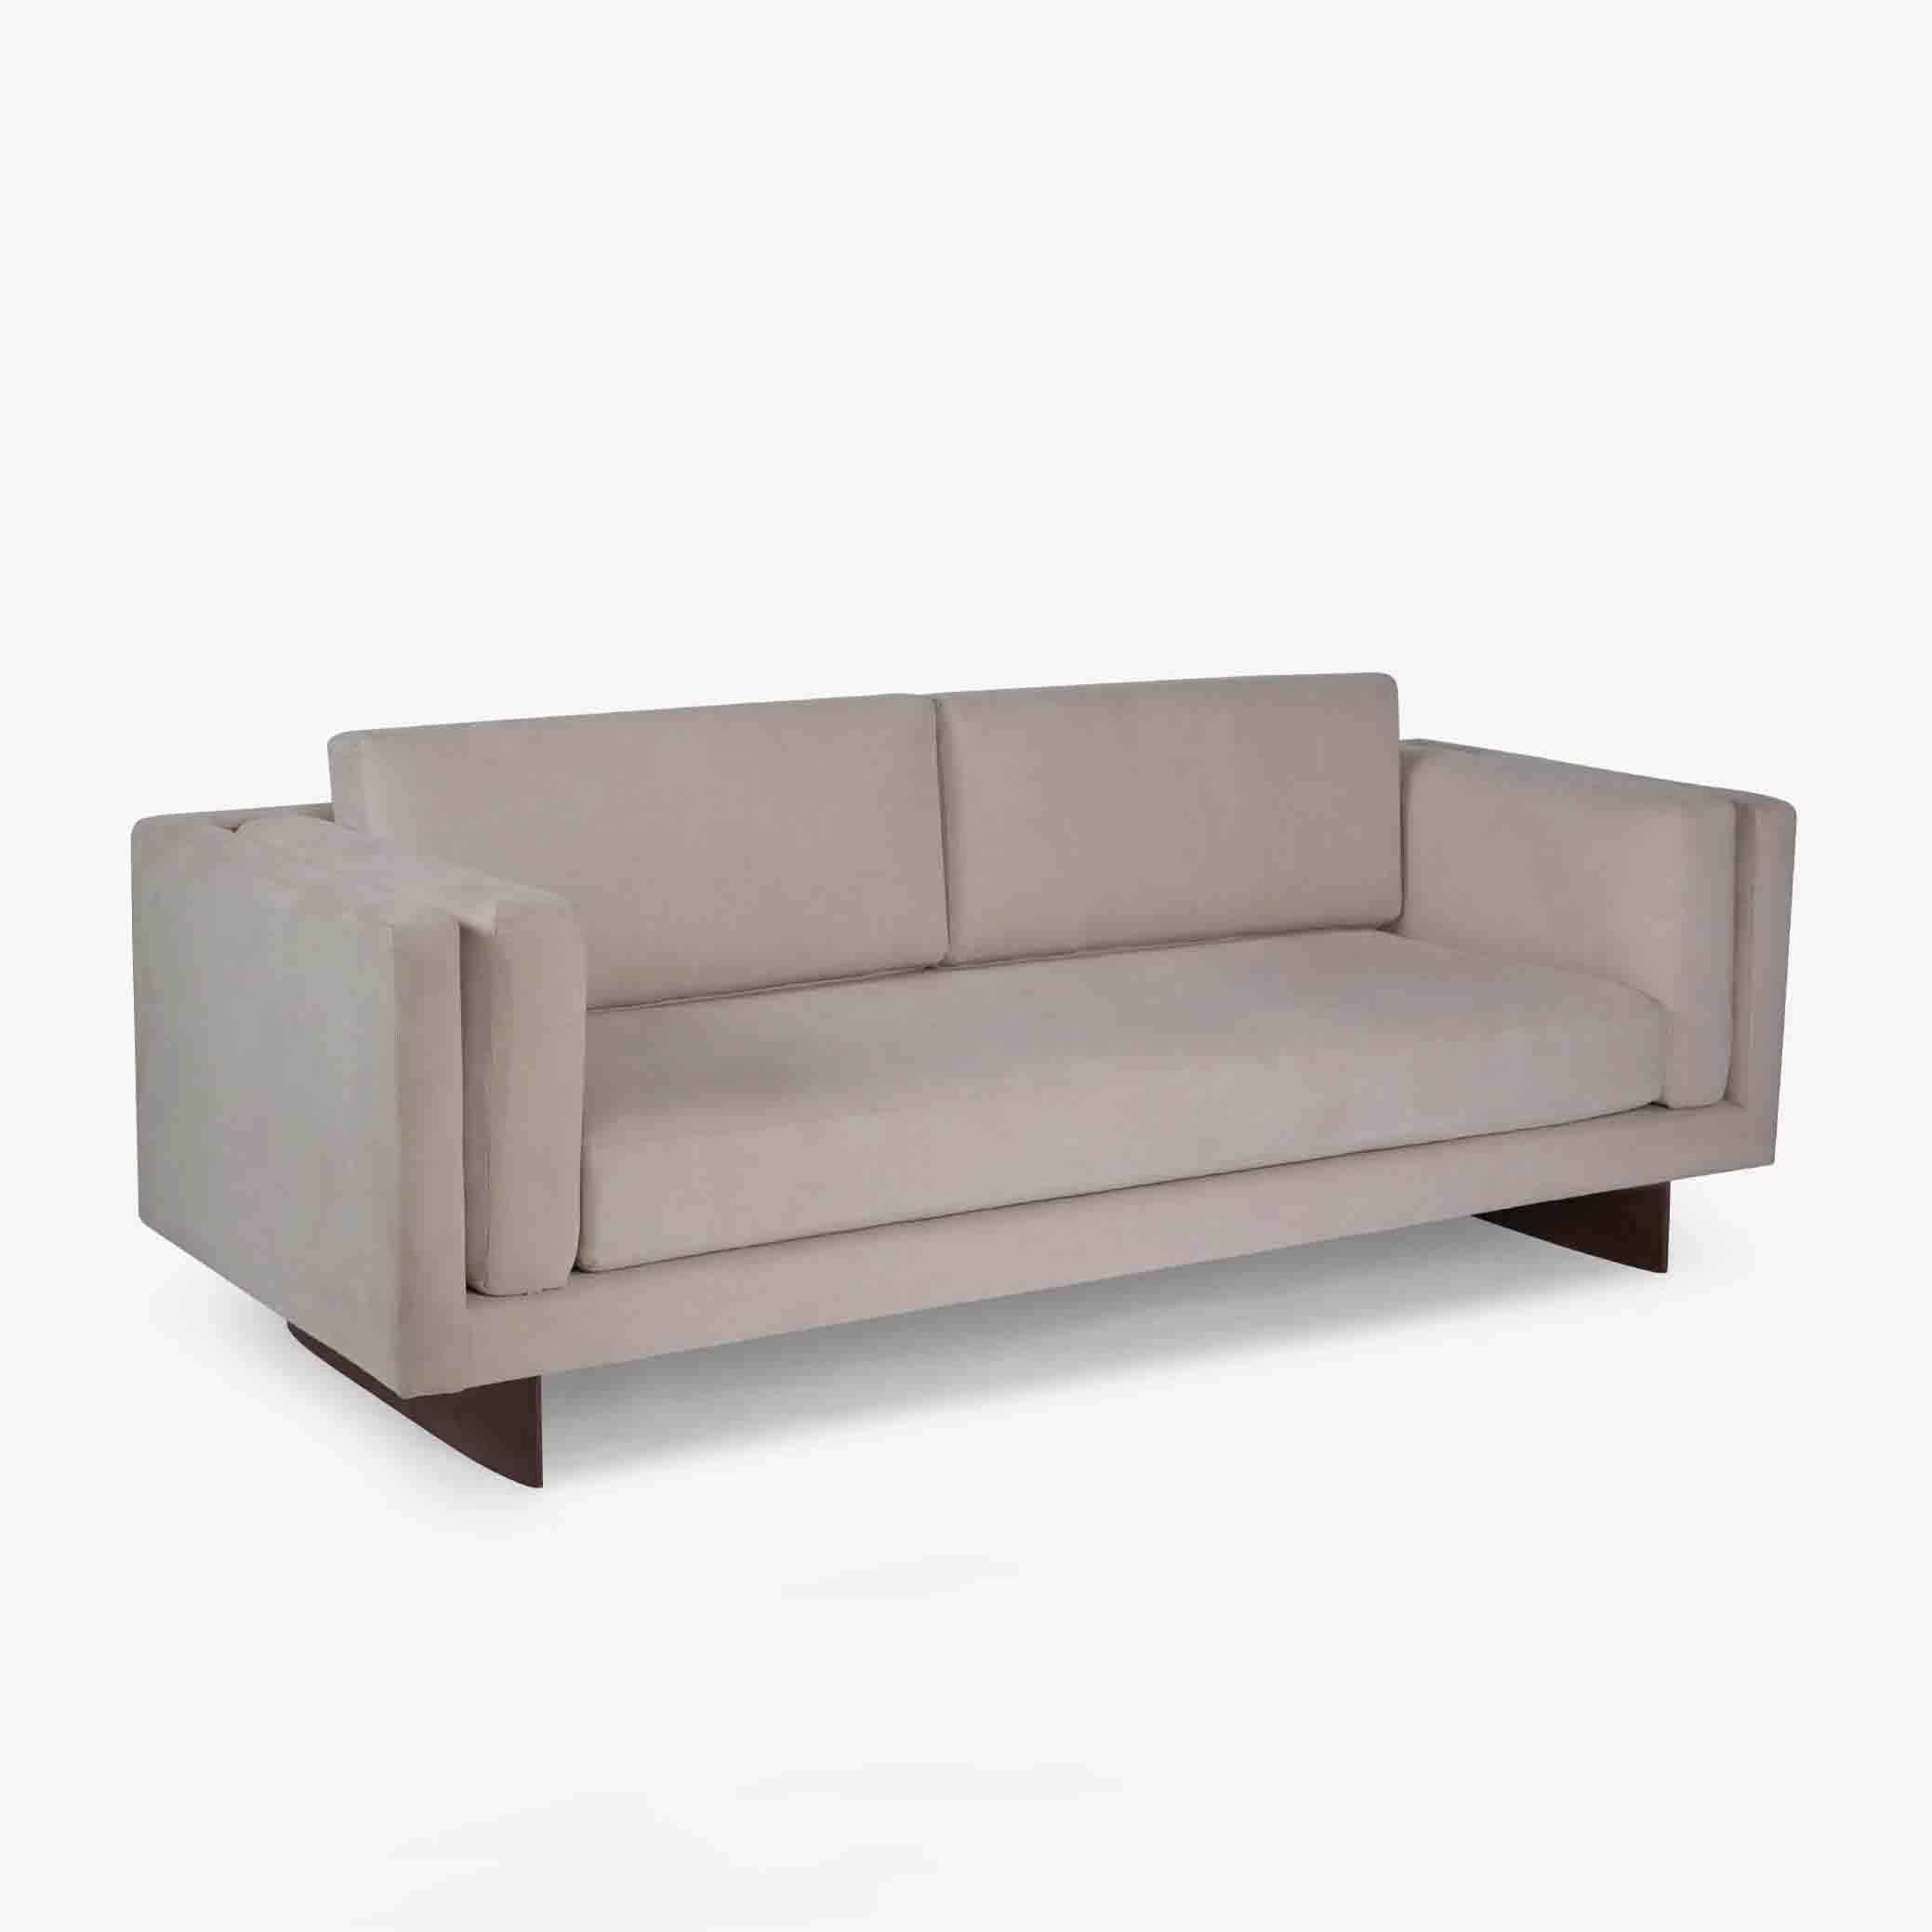 Chiyo Single Seater Sofa